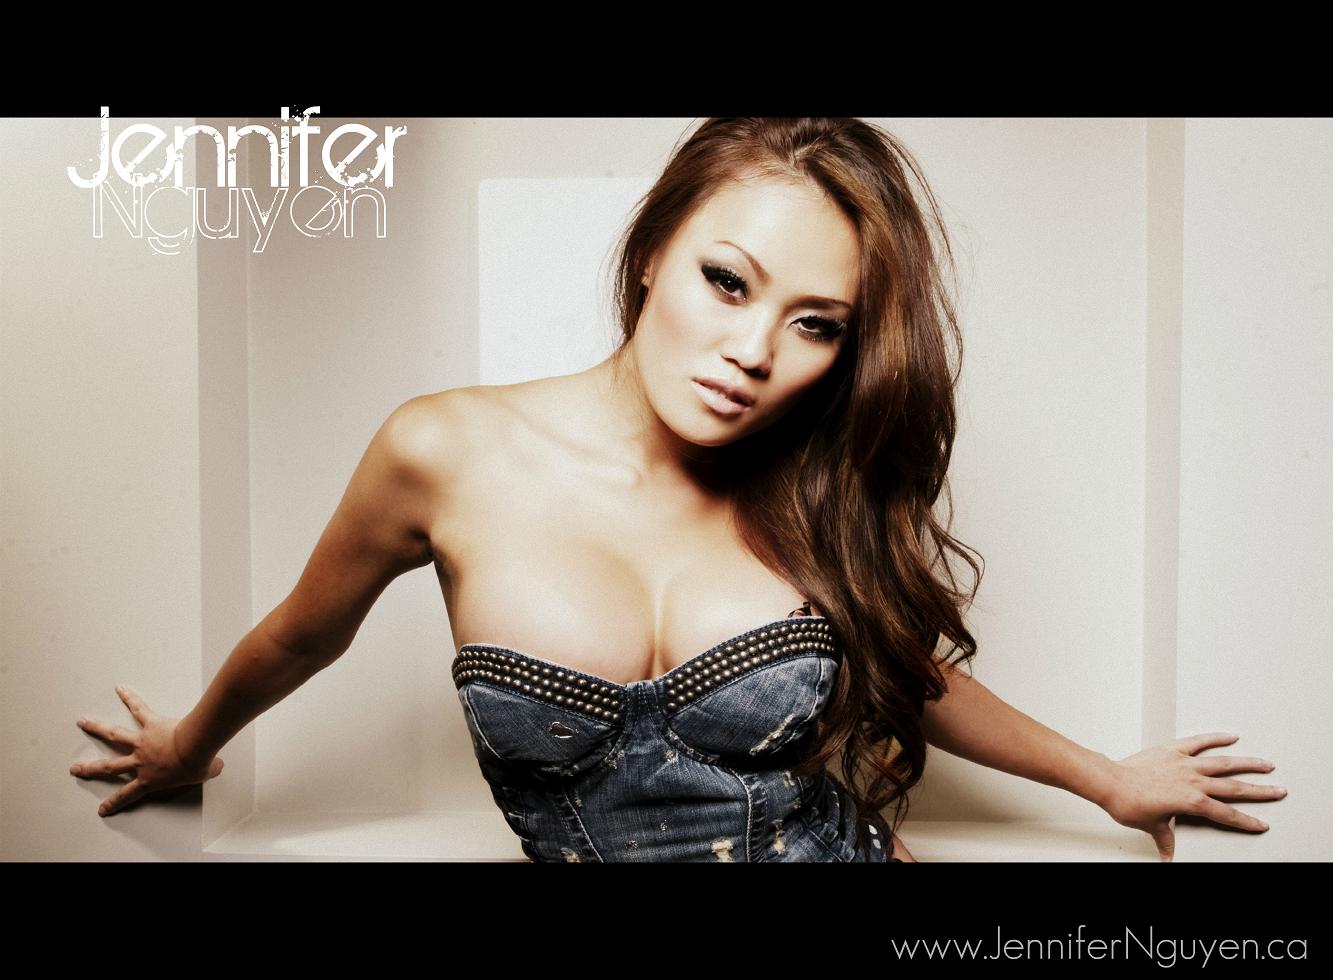 More Jennifer Nguyen